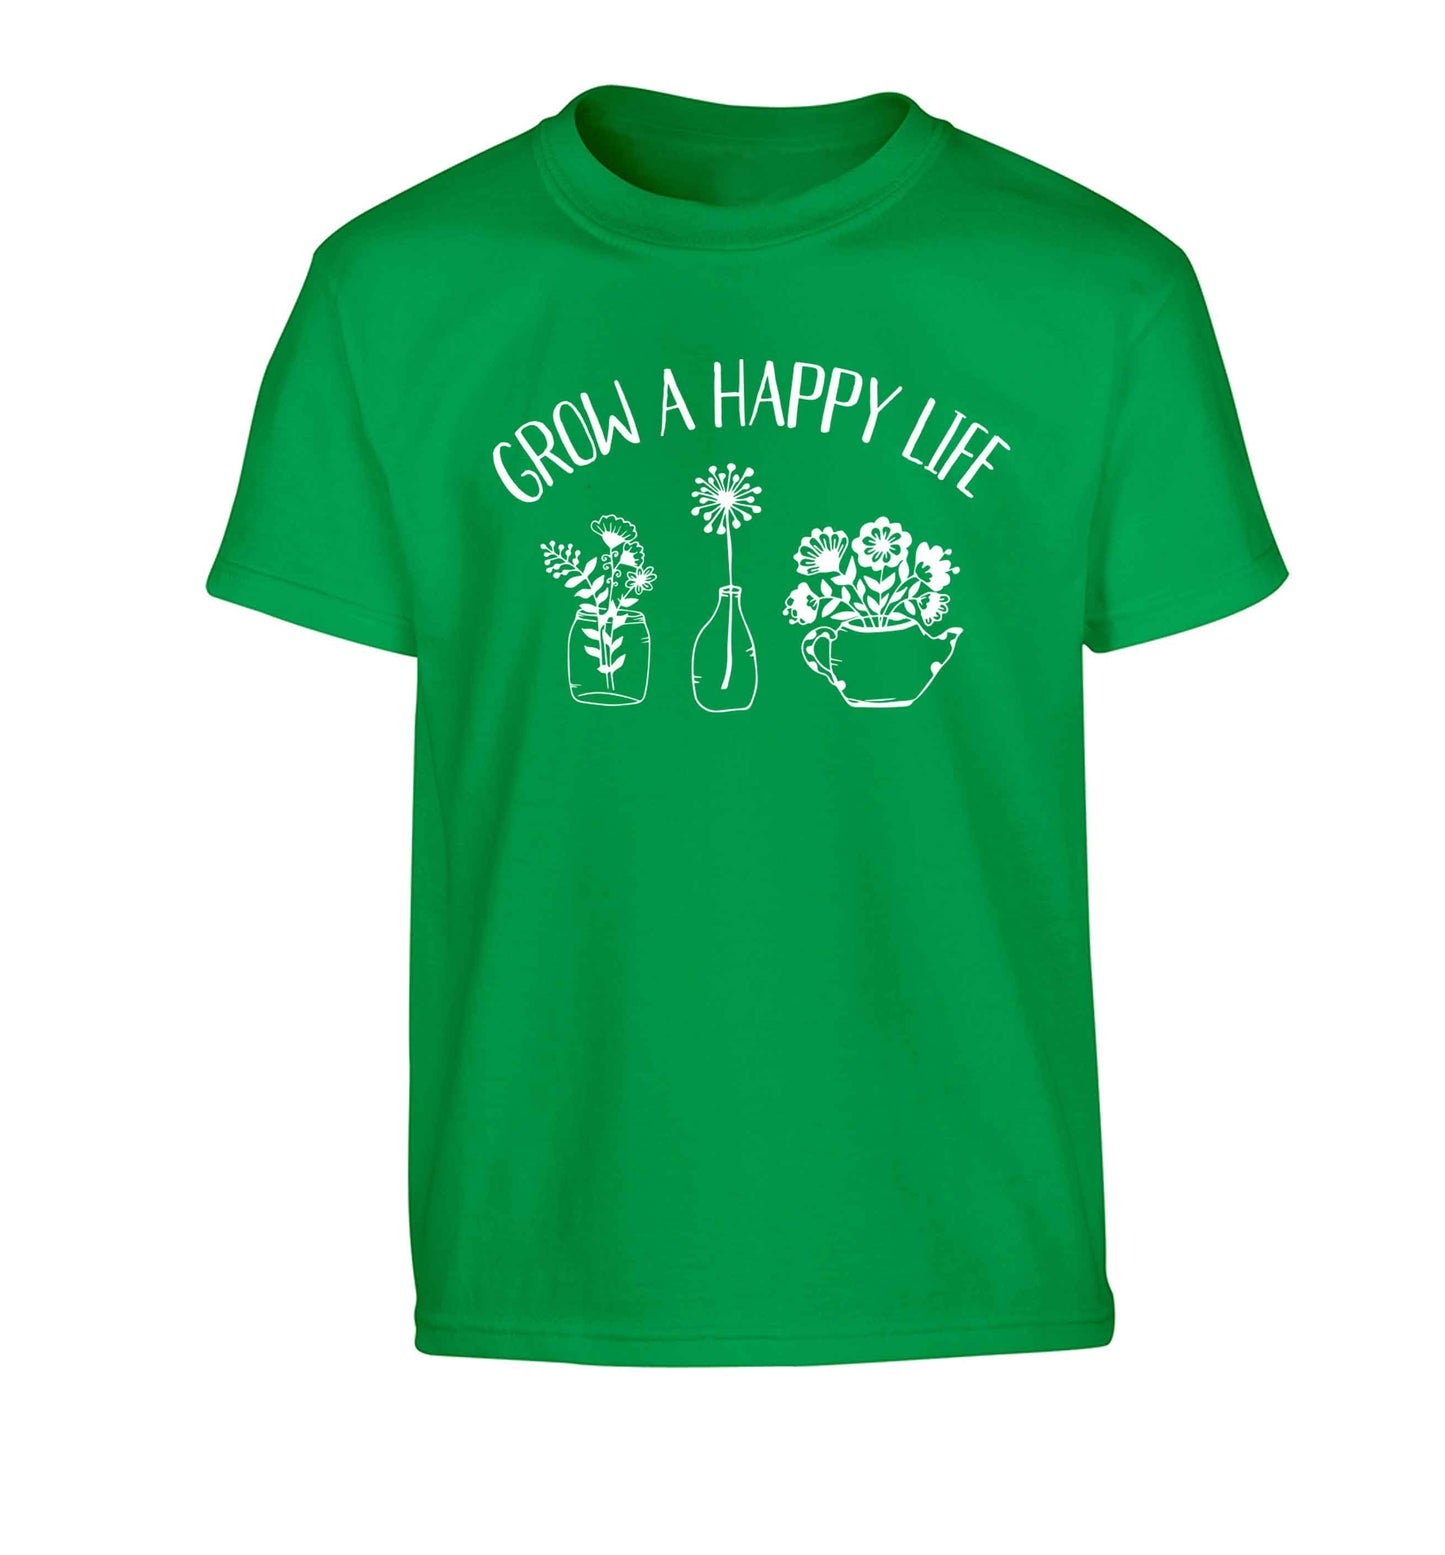 Grow a happy life Children's green Tshirt 12-13 Years